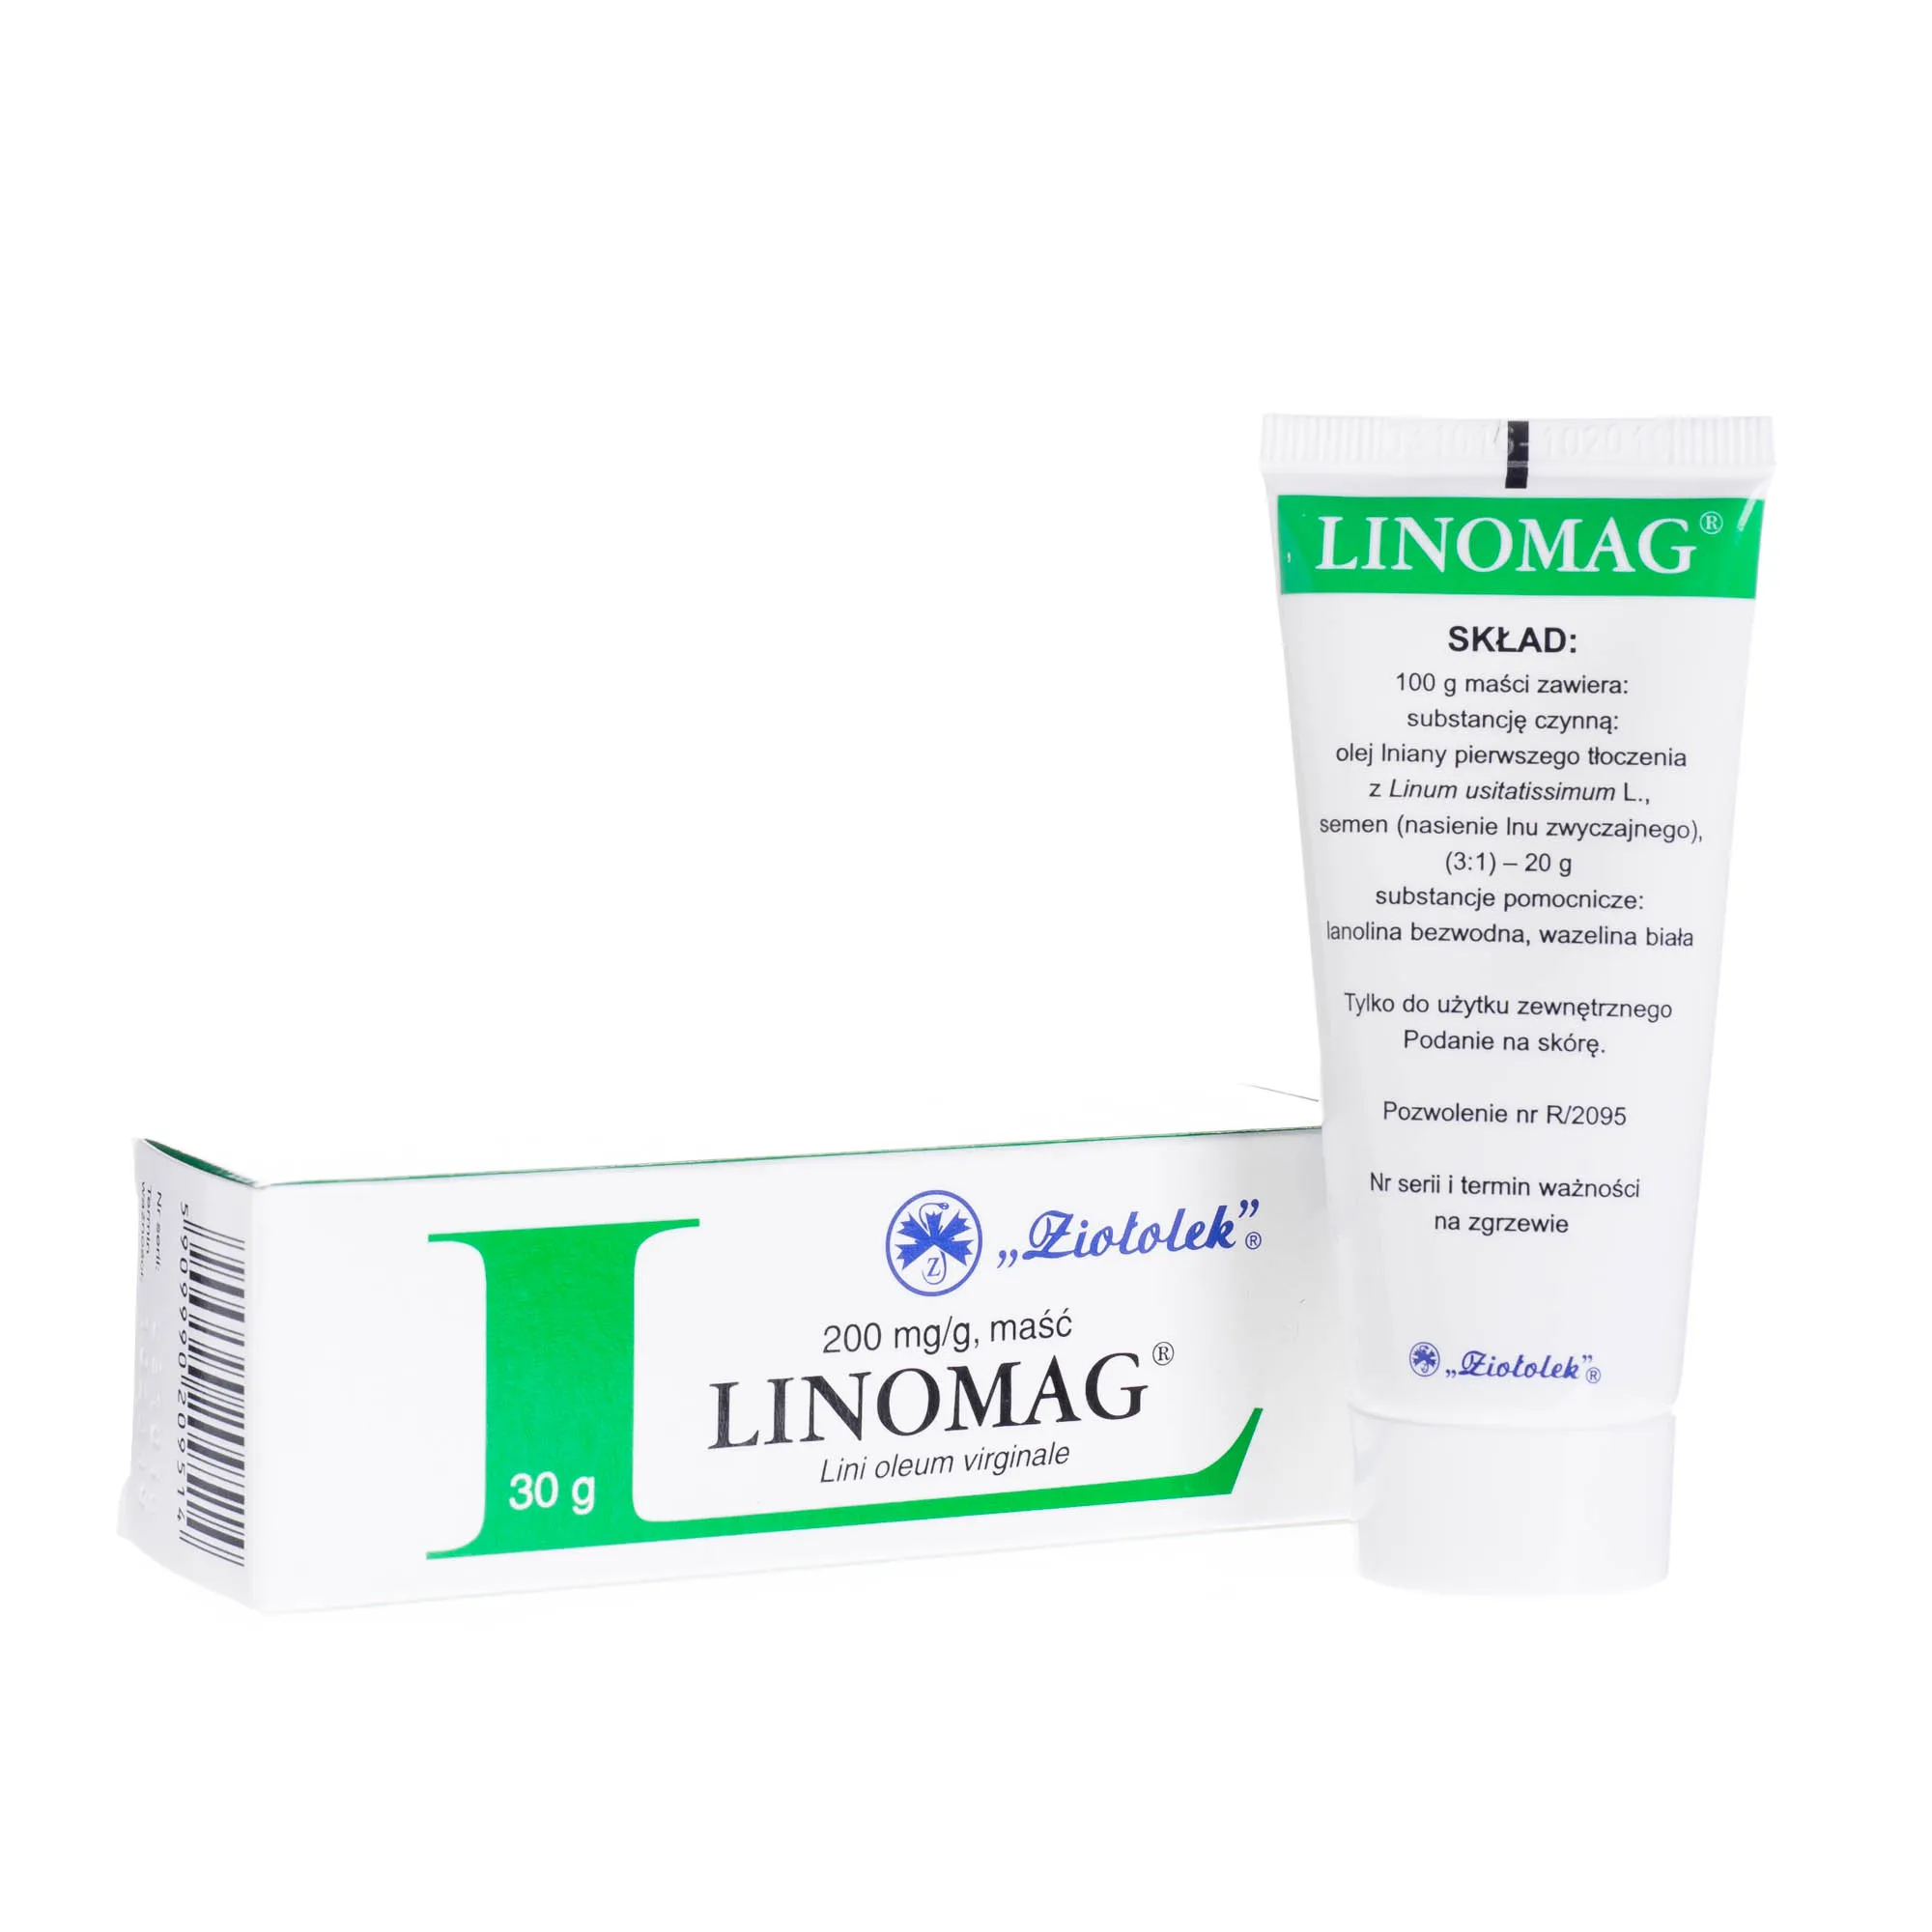 Linomag Lini oleum virginale 200 mg/g, maść 30 g